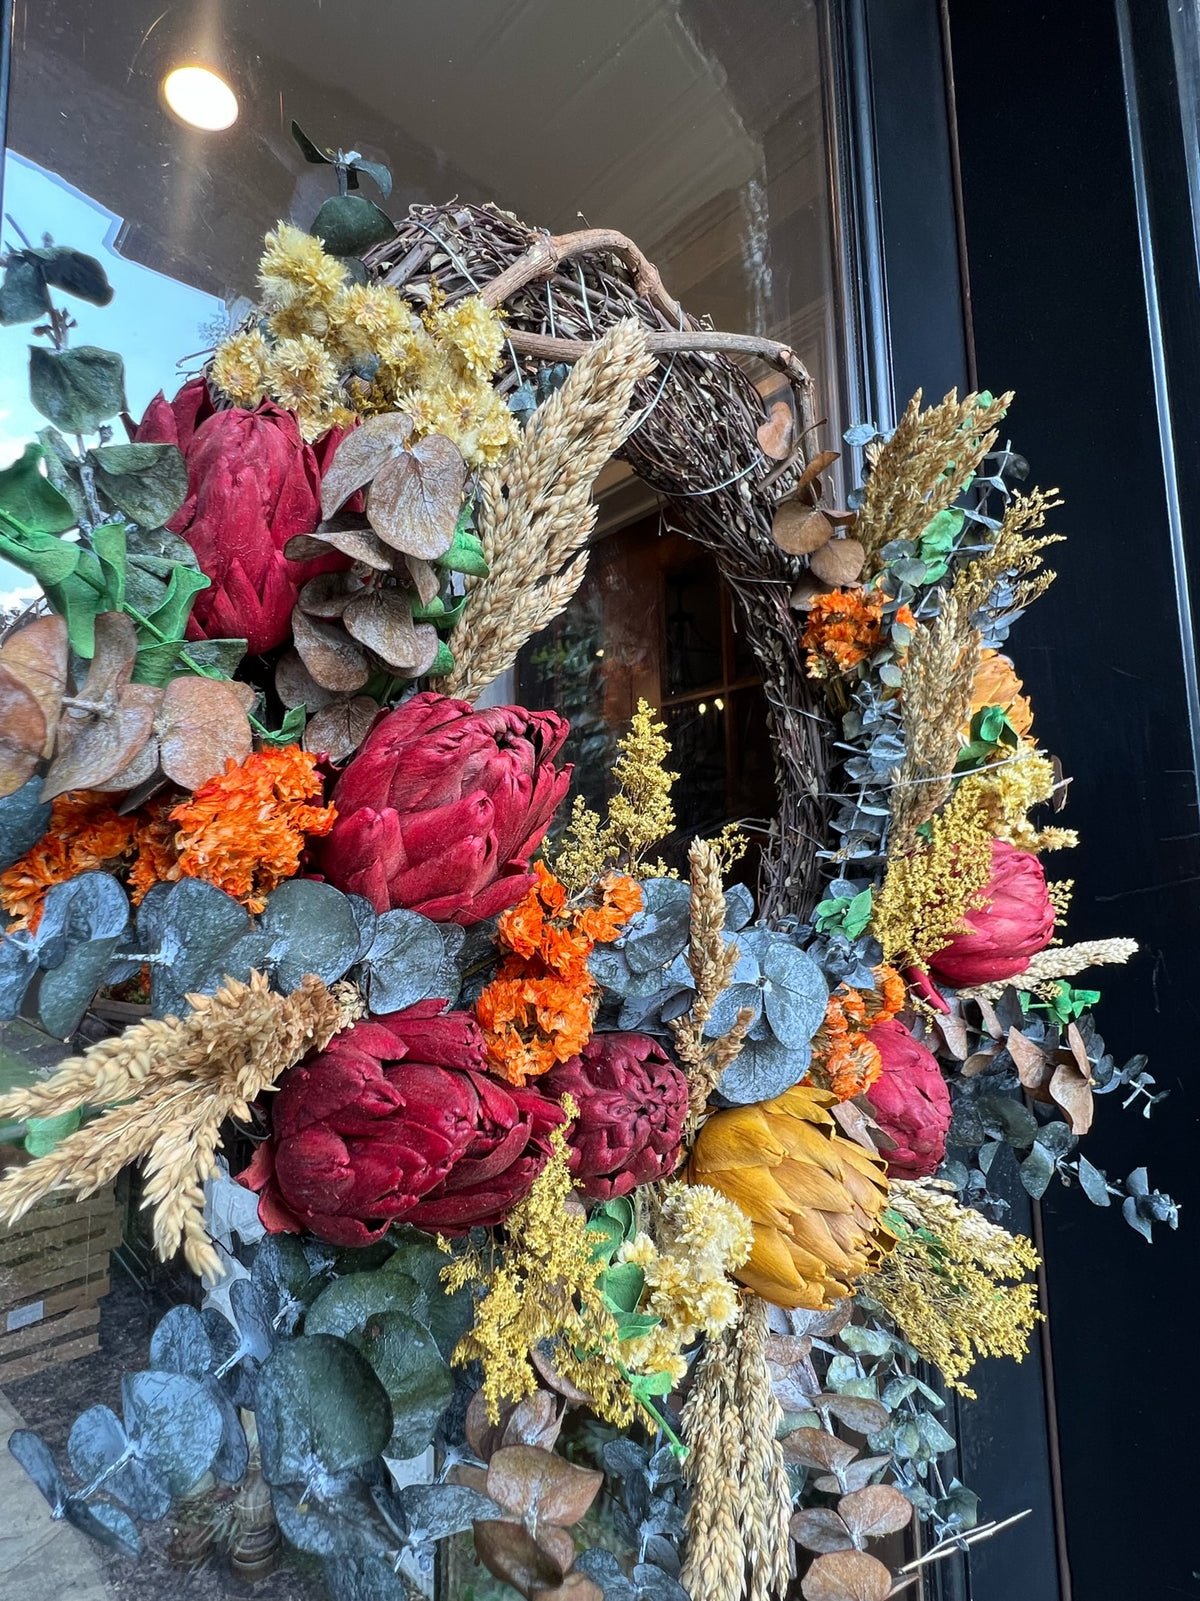 Wreath -Floral Artichoke Half Wreath 21”